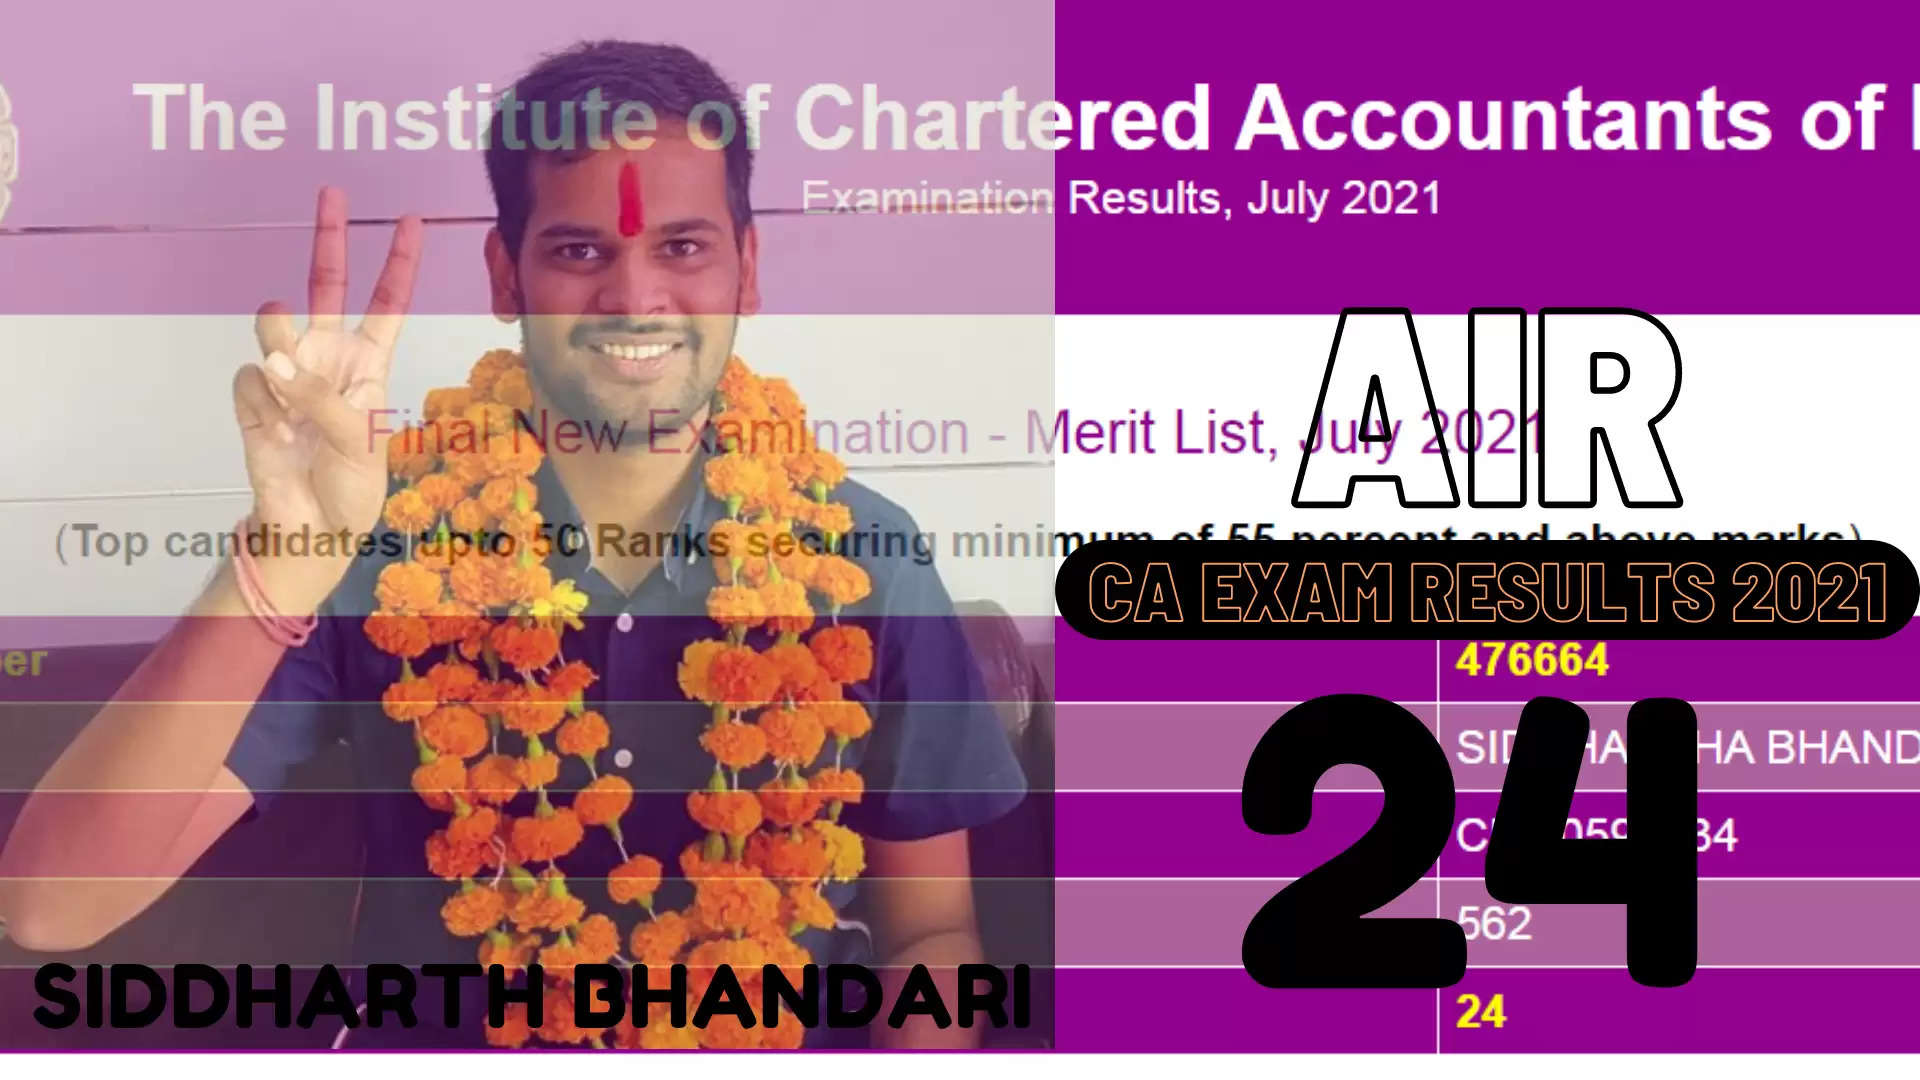 SIddharth Bhandari AIR 24 CA Results ICAI Results 2021